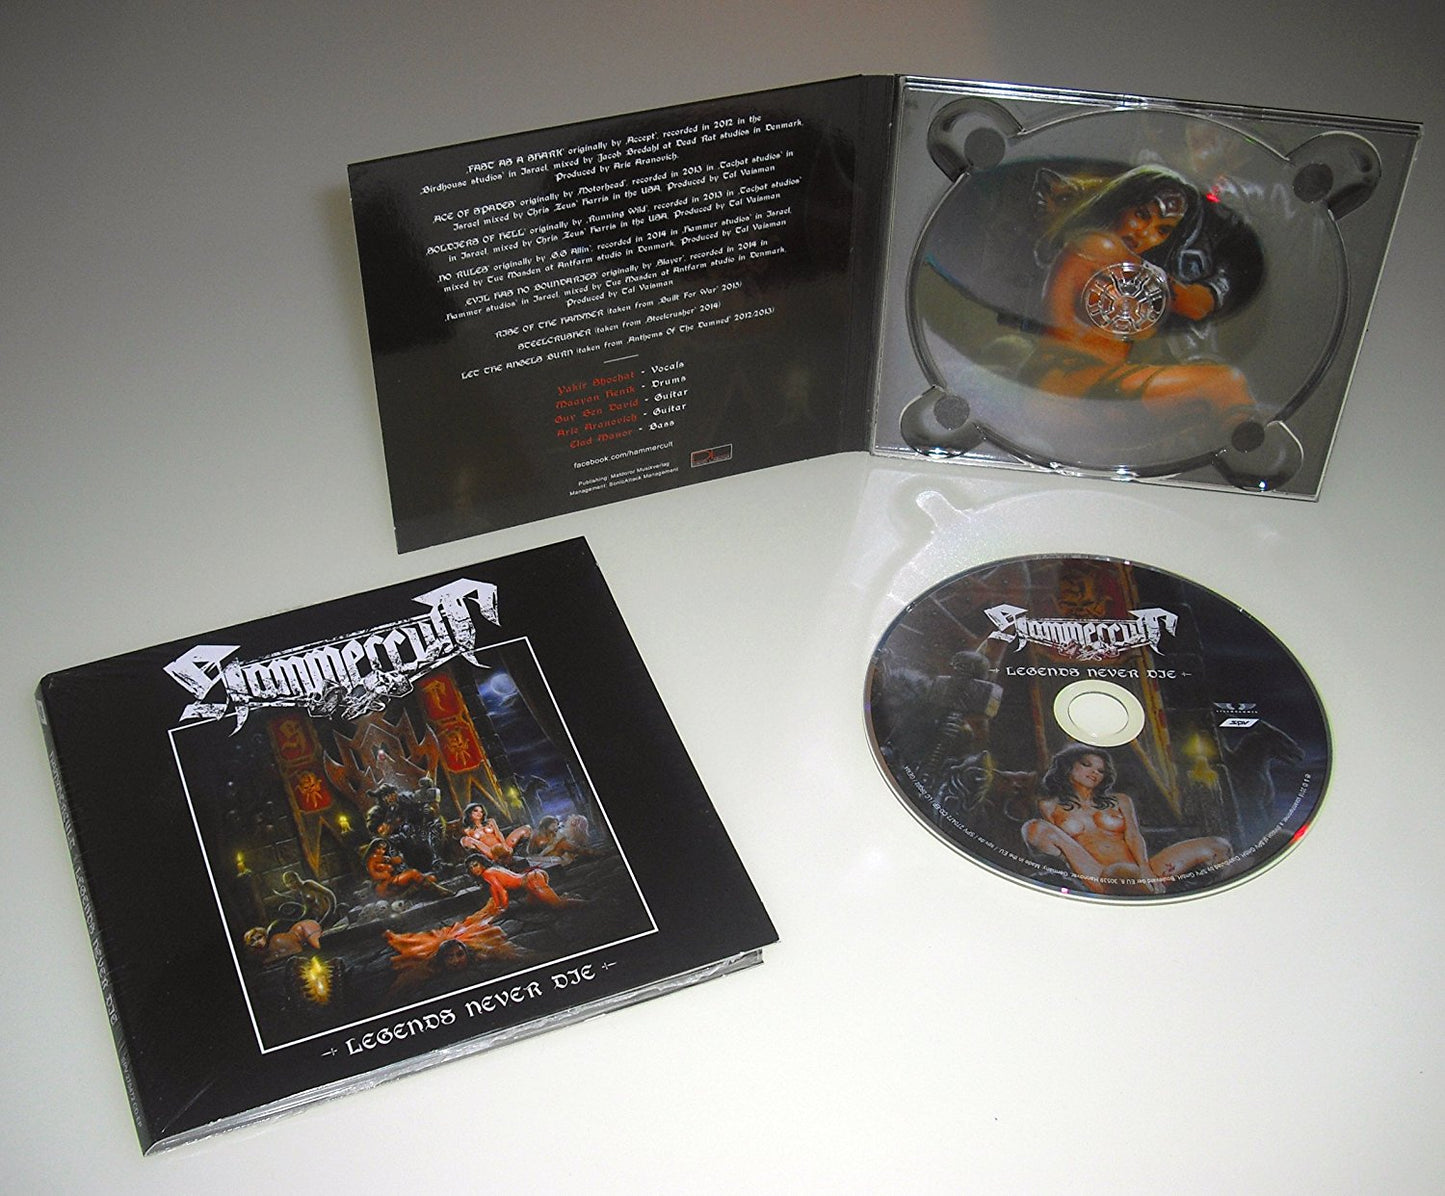 Hammercult "Legends Never Die" CD